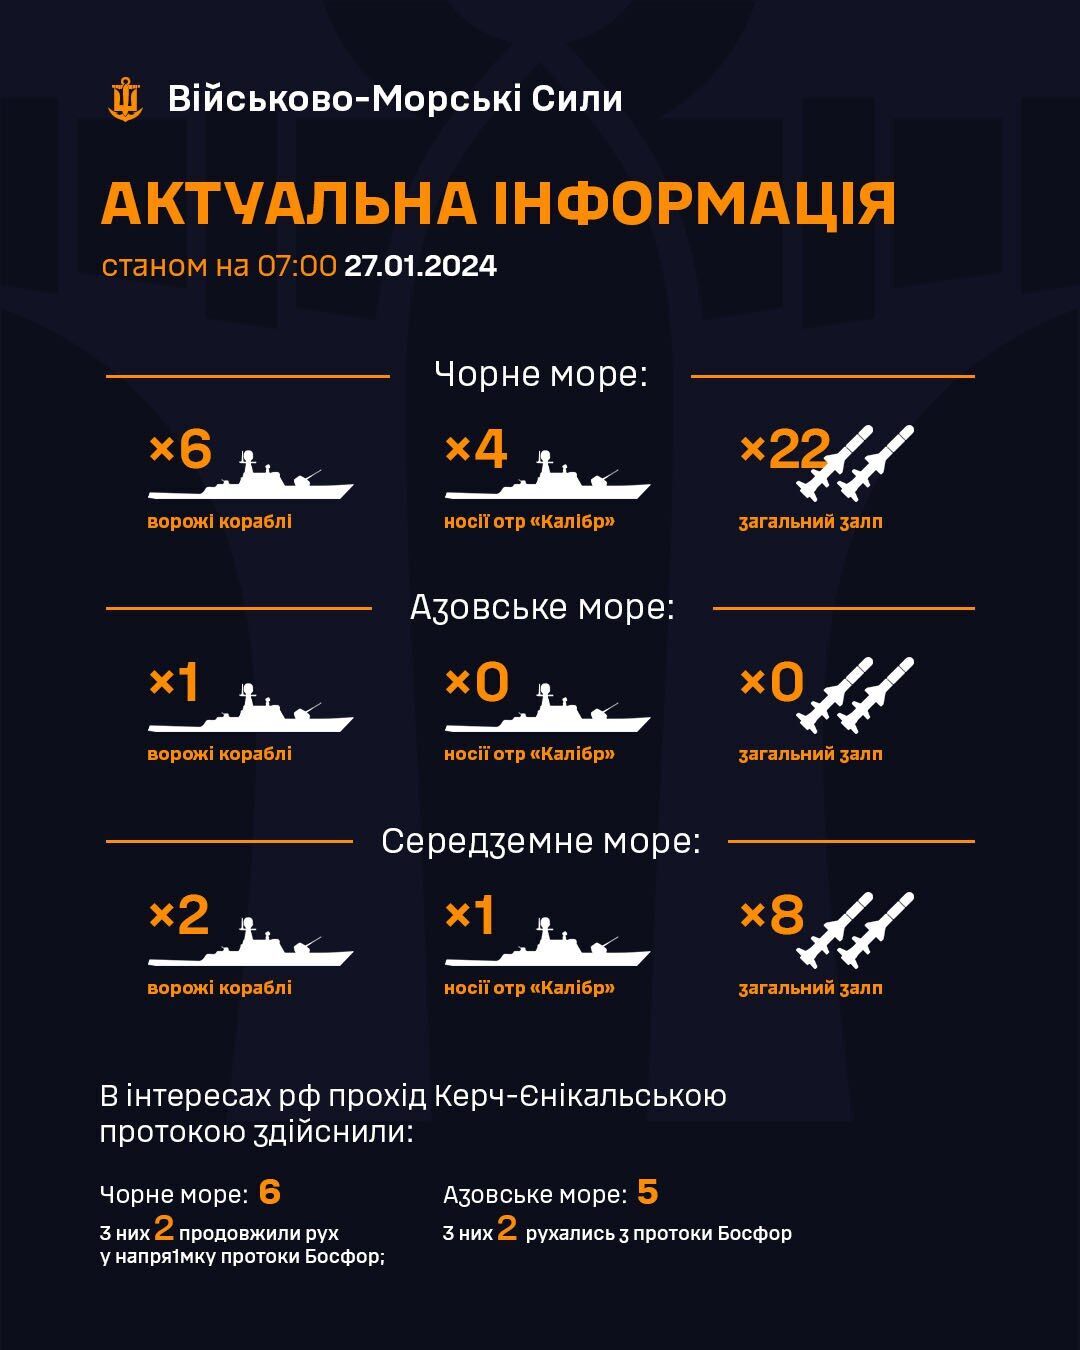 Окупанти вивели у Чорне море кораблі з 22 ракетами  qrxiquiuqidrtant